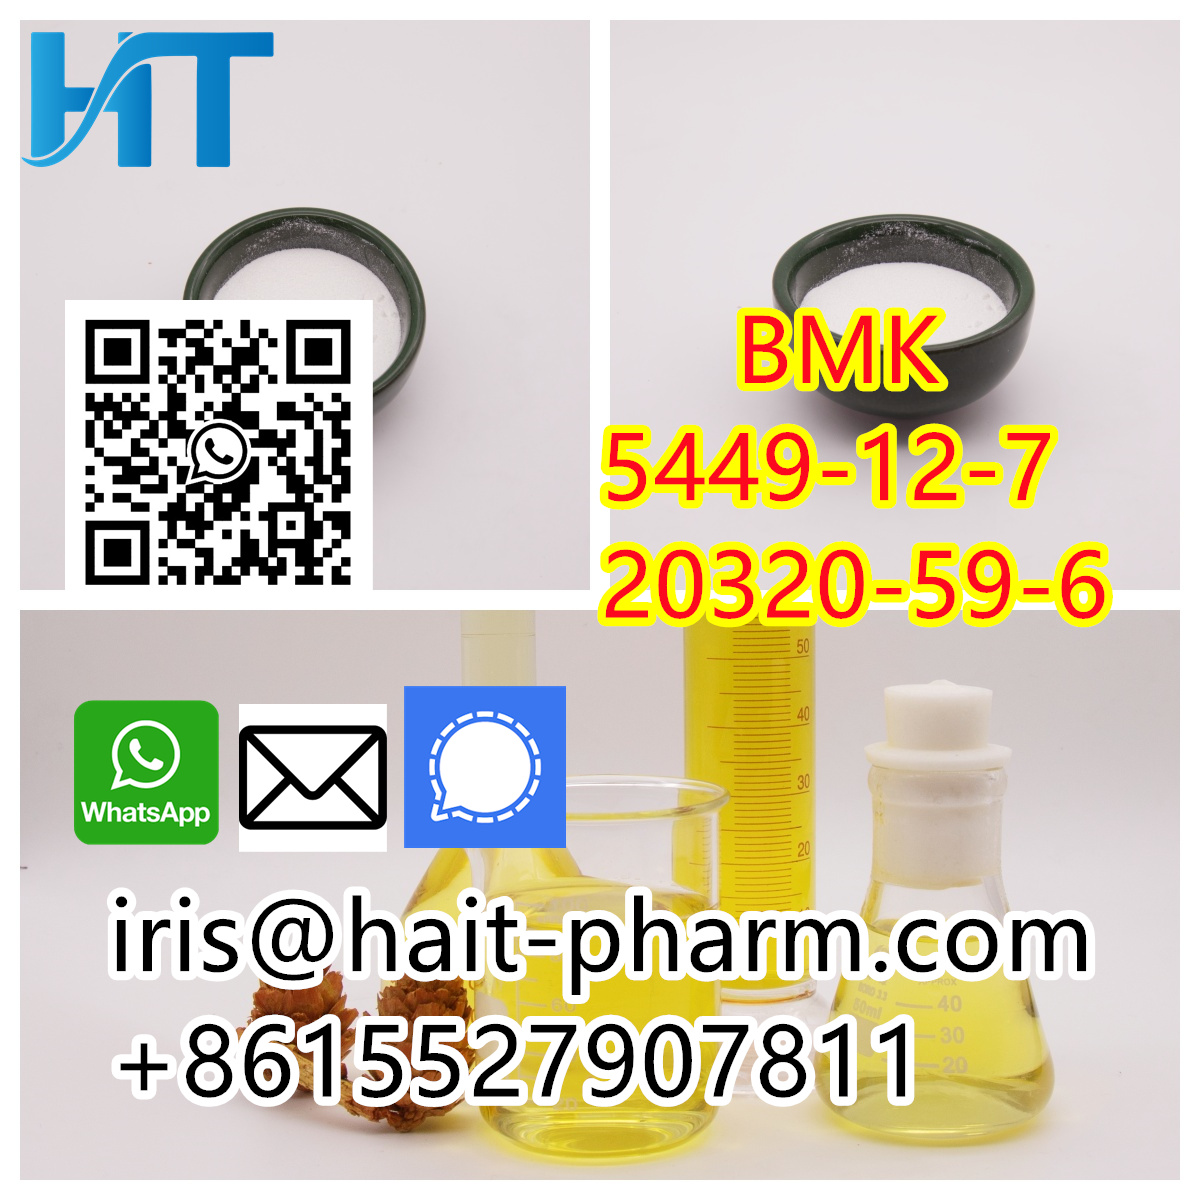 CAS 5449127 BMK Glycidic Acid sodium salt 999 - Montana - Kalispell ID1545373